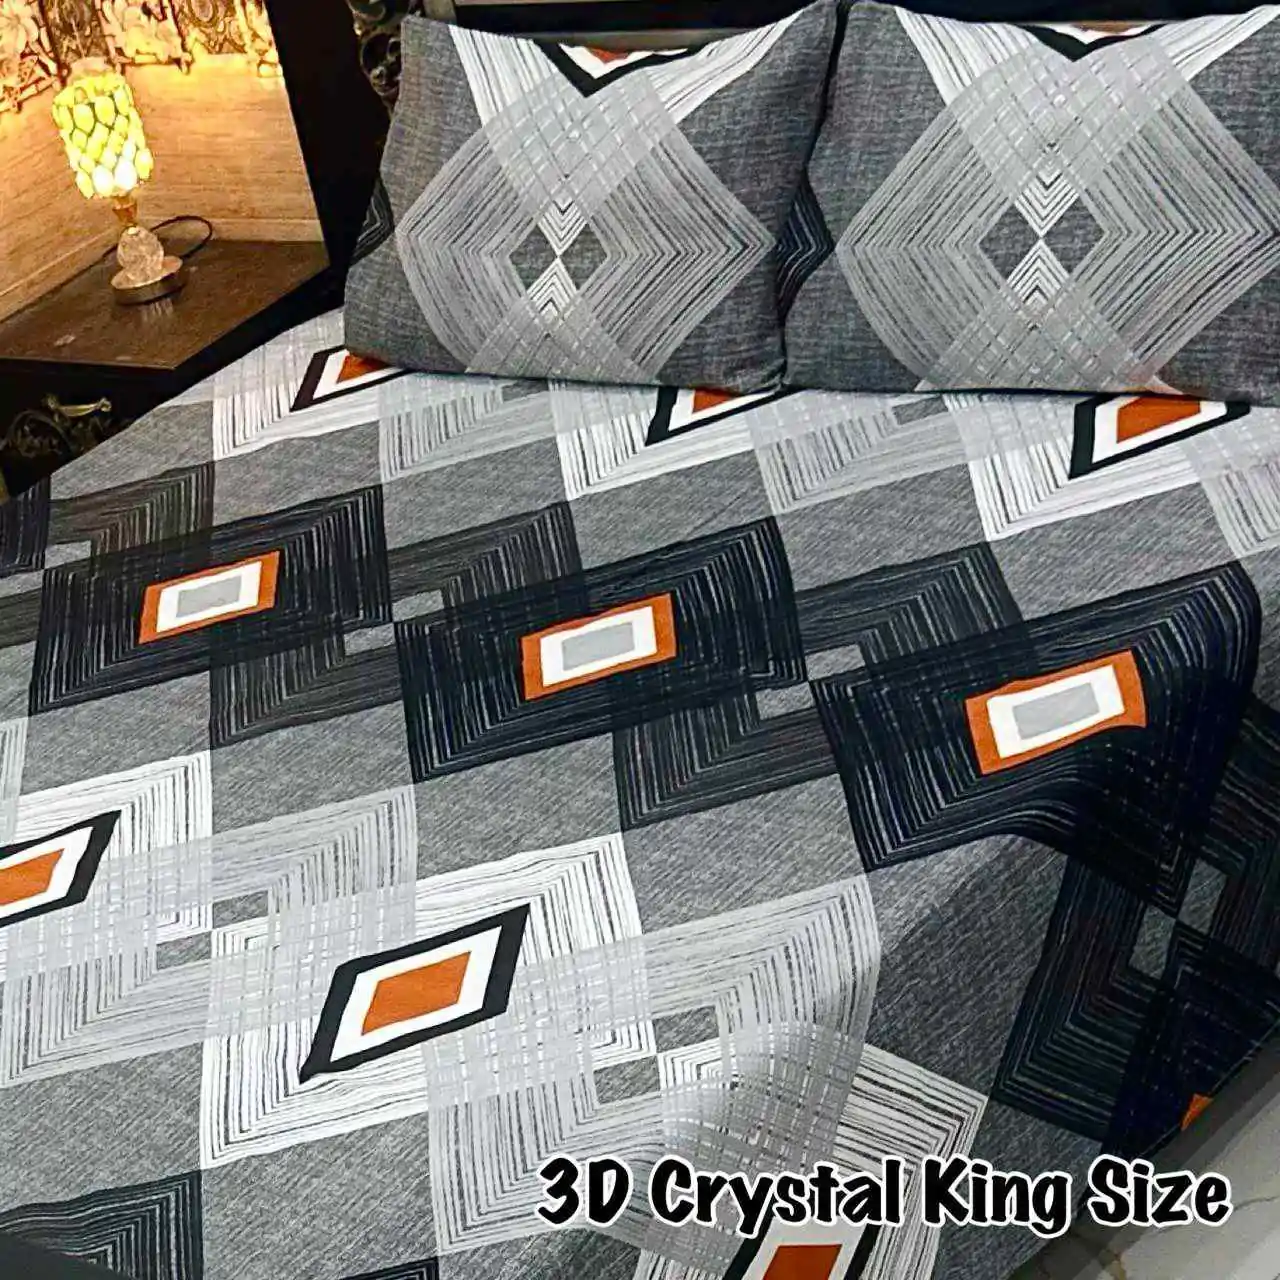 DF-CBSKS-6: DFY Bedding 3D Crystal Bed Sheet King Size